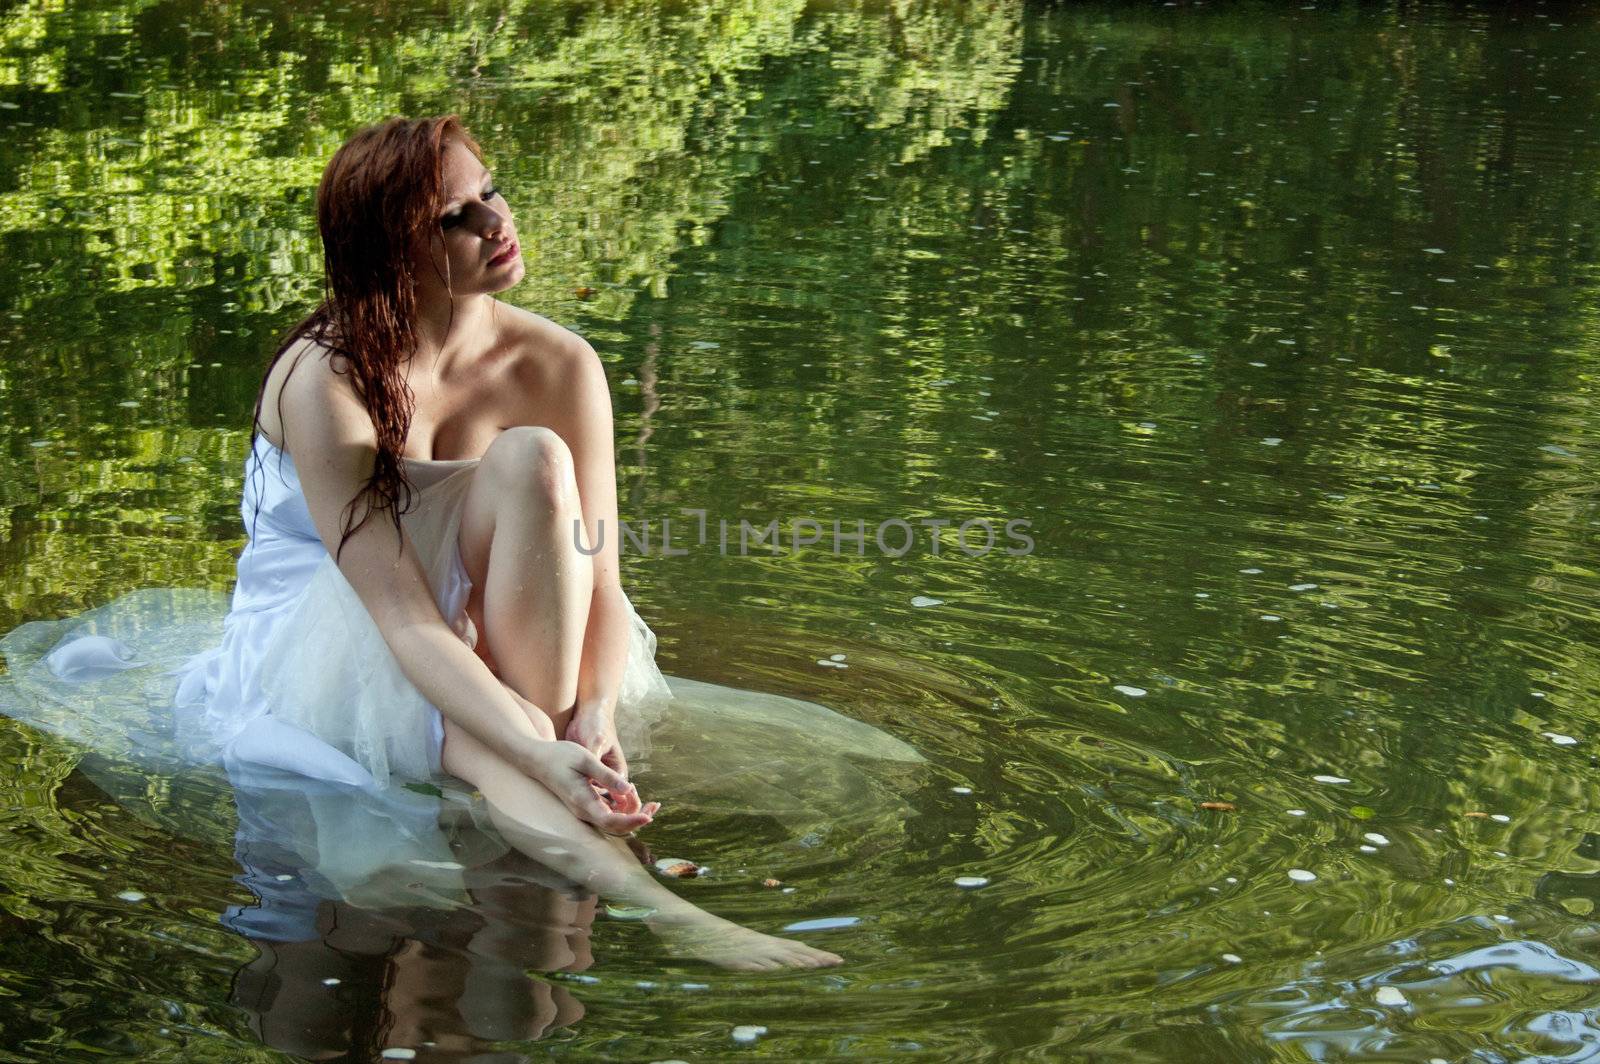 A beautiful bride sitting in water by mahnken